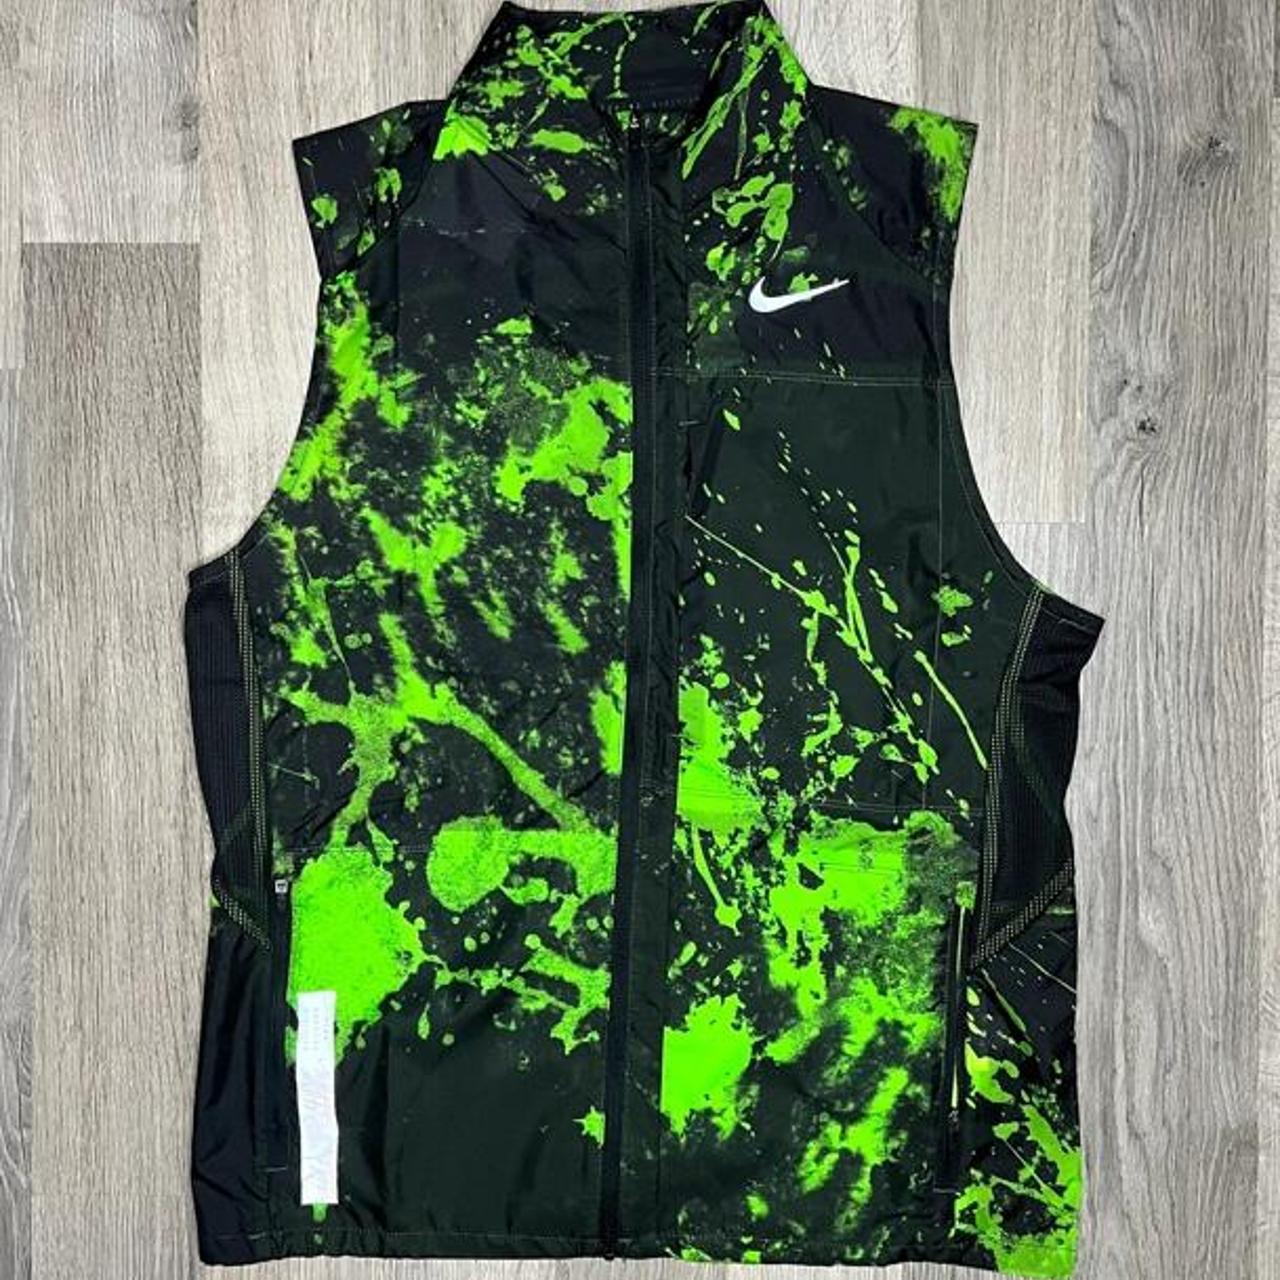 Nike Running Run Division Repel vest in black